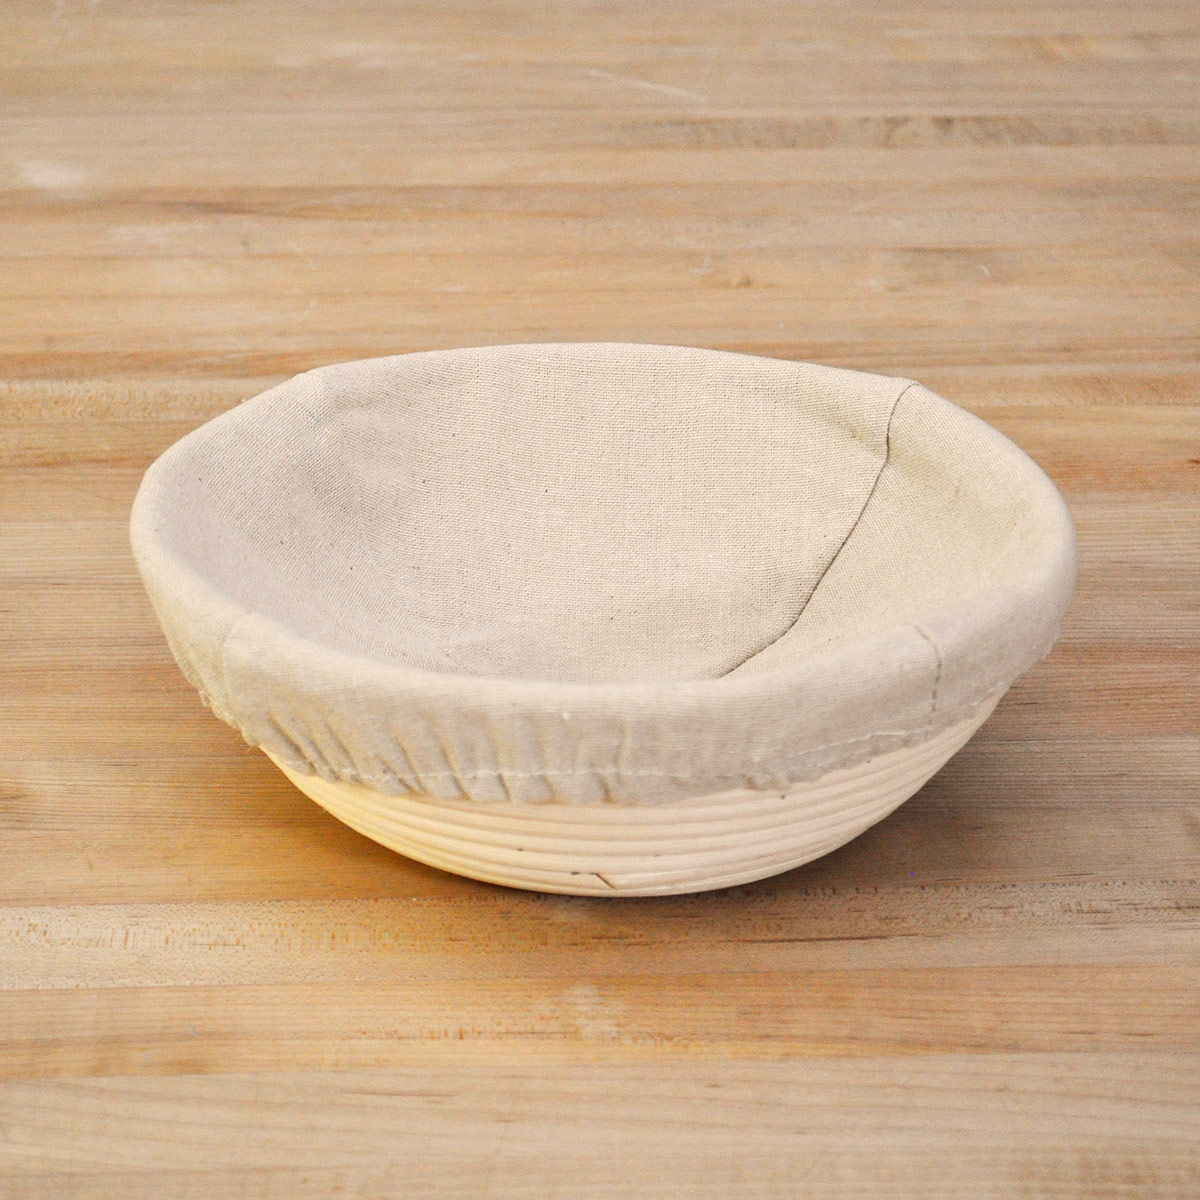 Wicker Proofing Basket - Elmendorf Baking Supplies